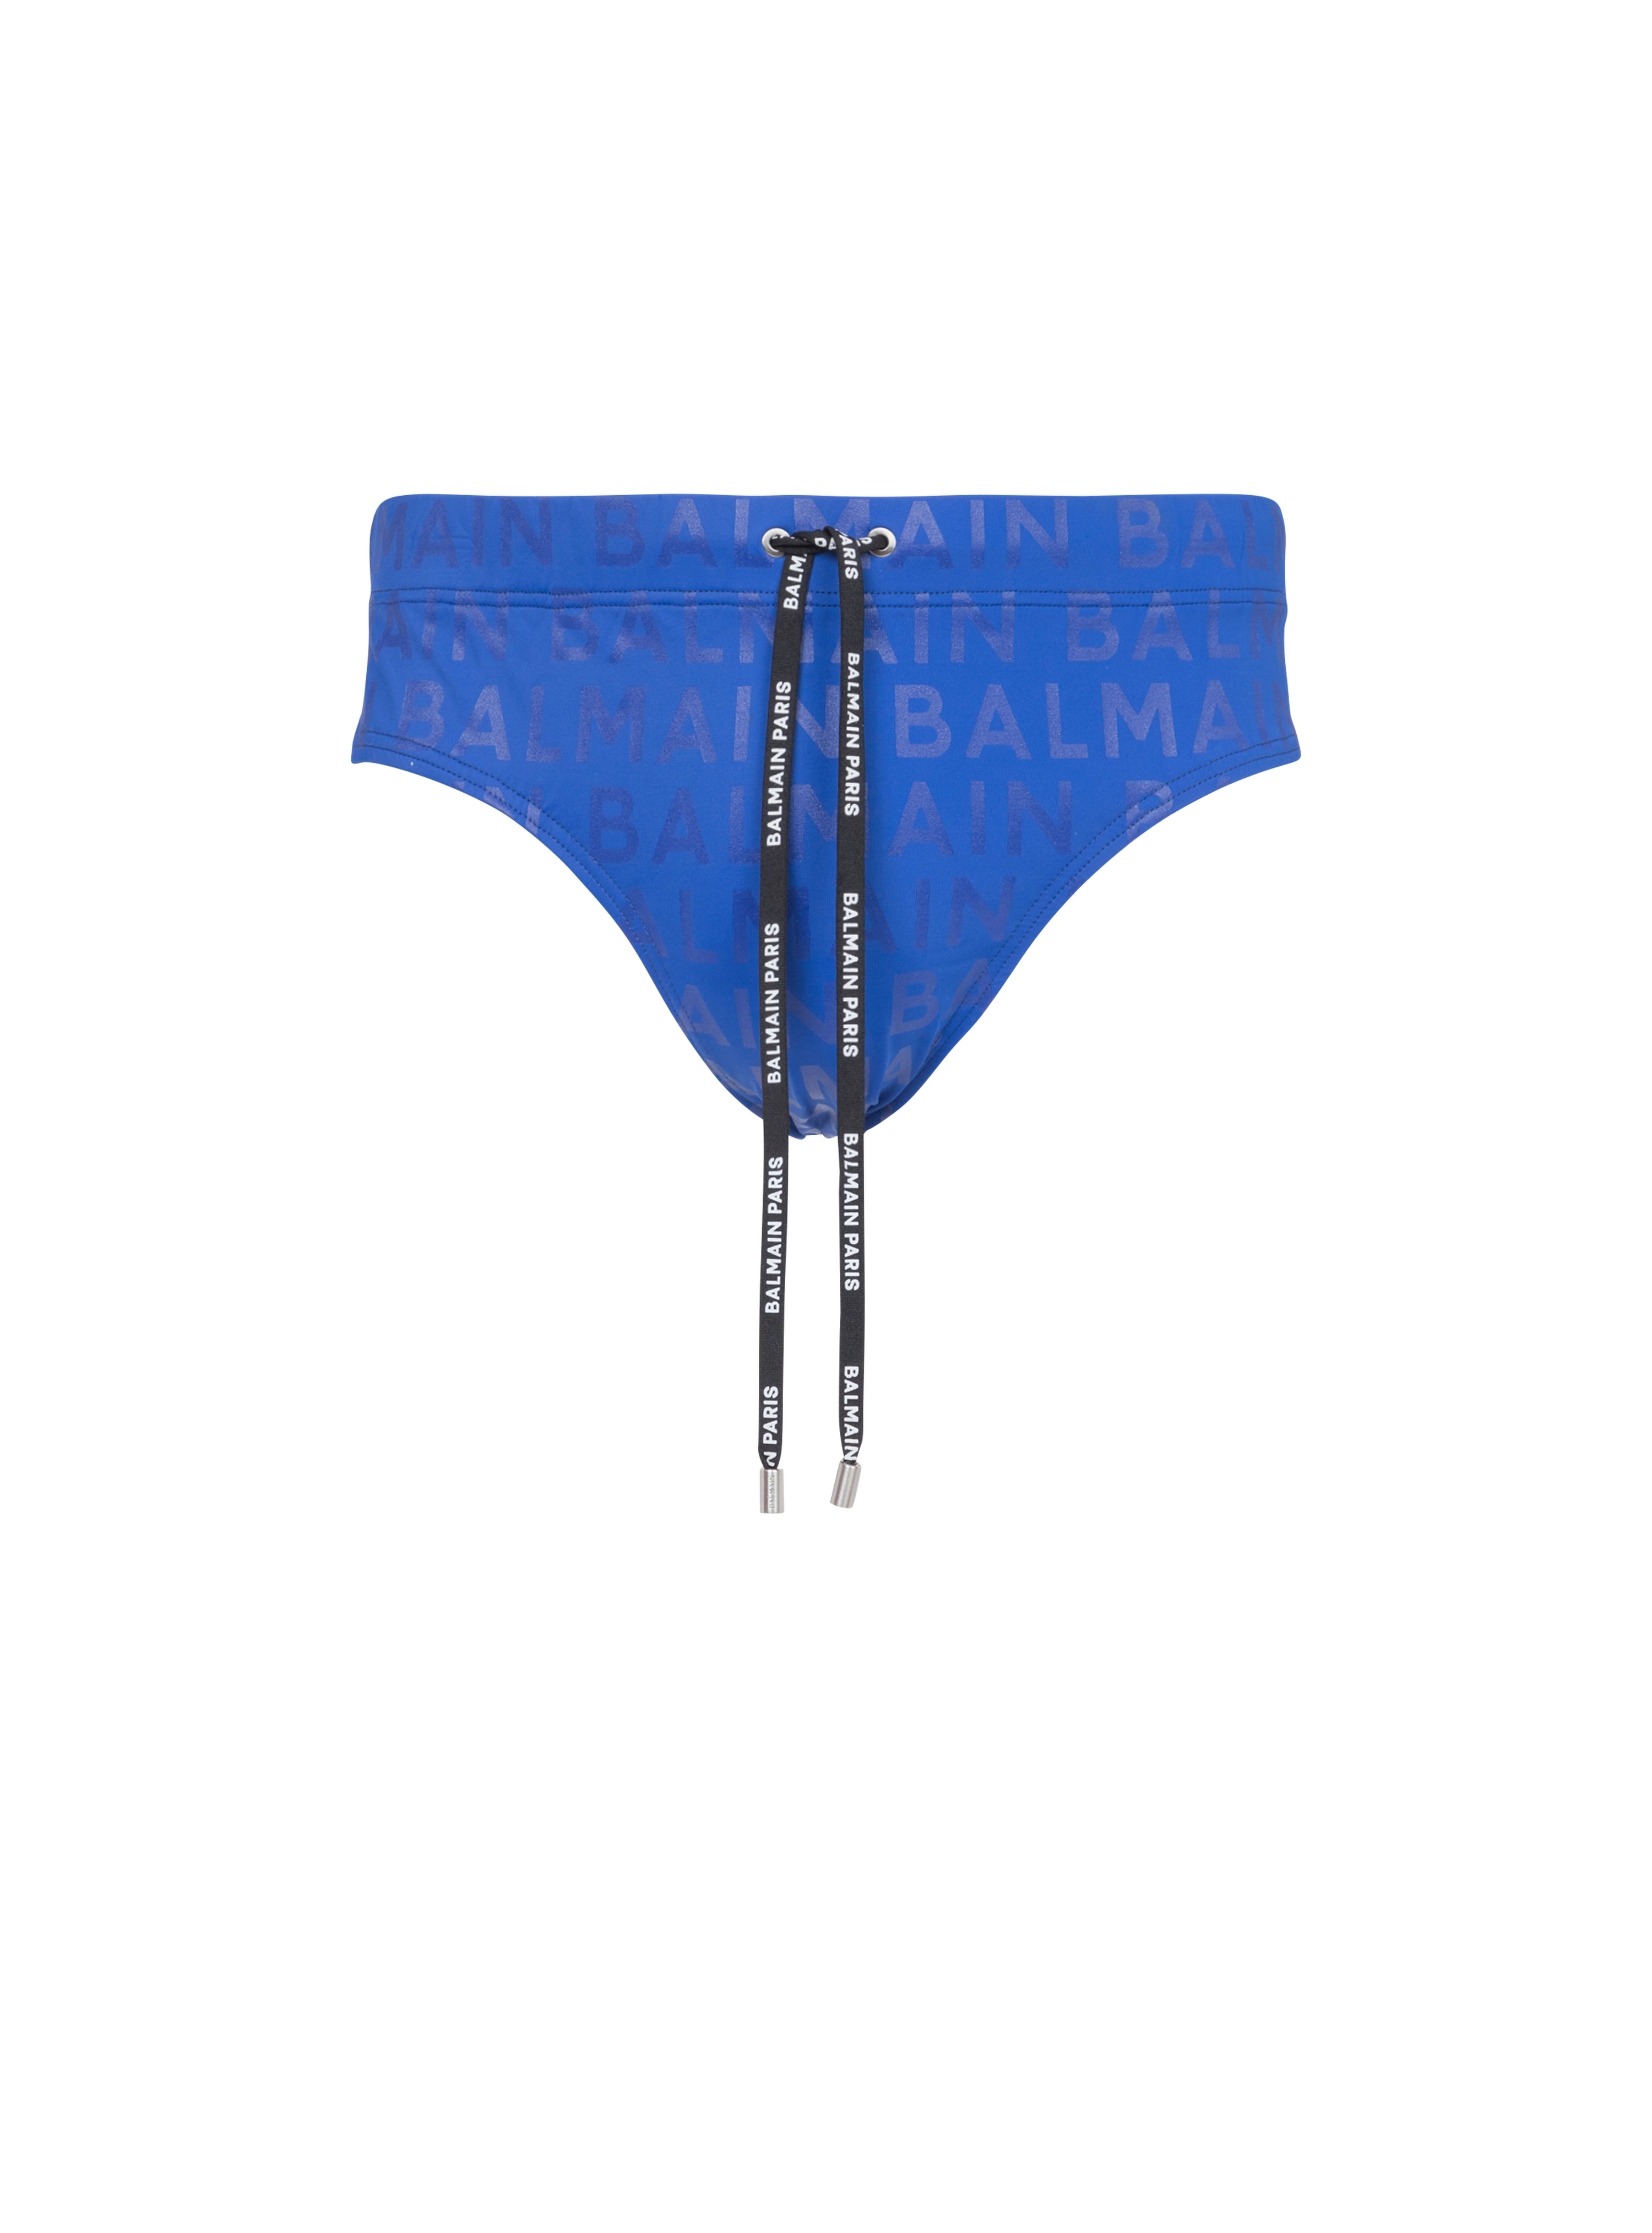 Balmain logo swimming trunks, blue